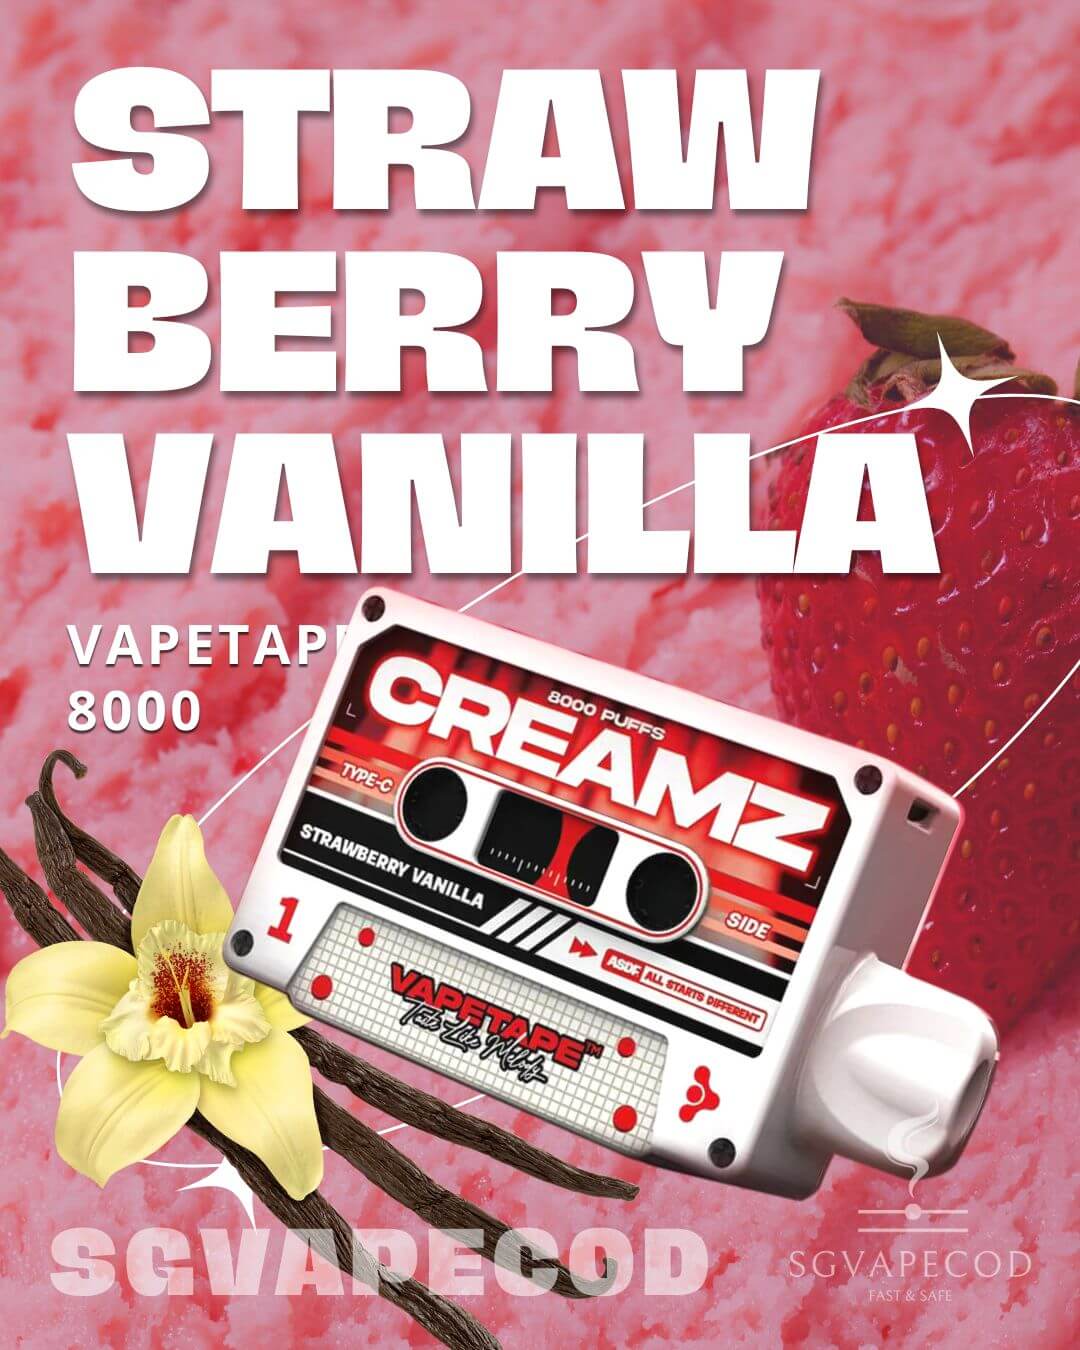 Vapetape-8000-Strawberry-Vanilla-(SG VAPE COD)